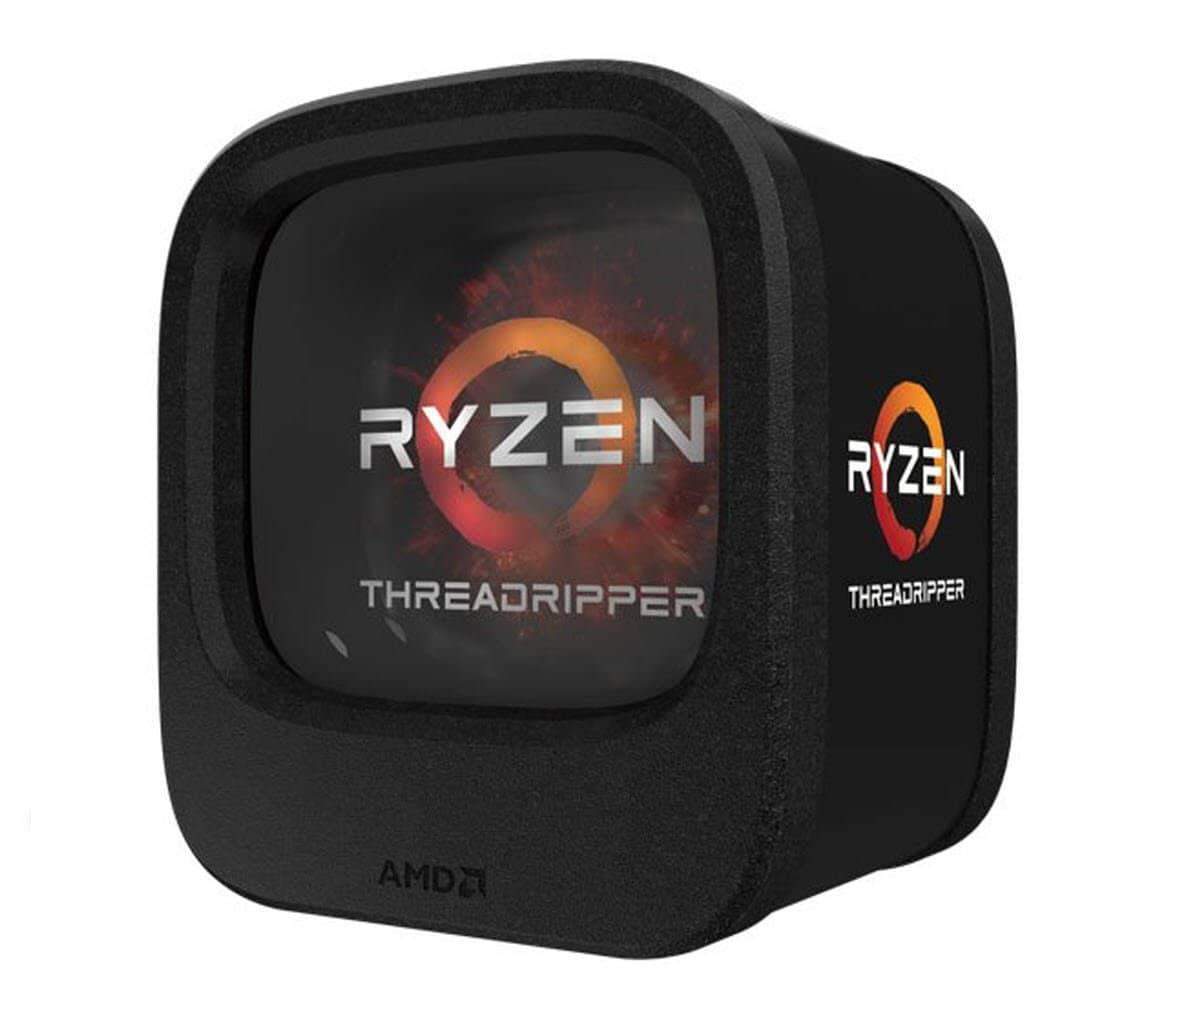 AMD Ryzen Threadripper 1950X (16-core/32-thread) Desktop Processor